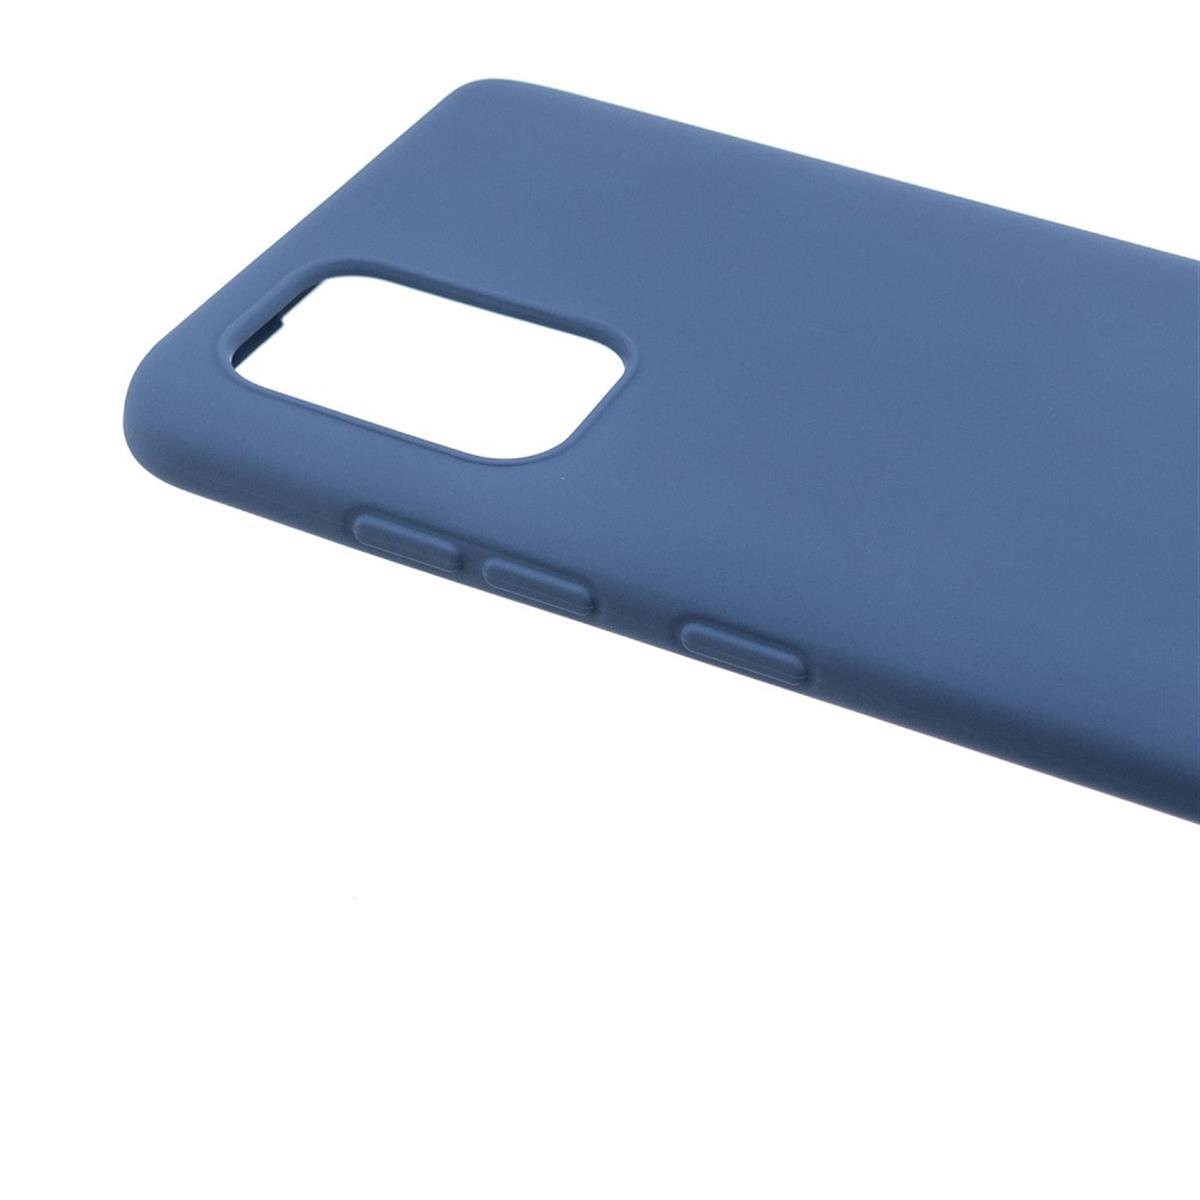 COVERKINGZ Handycase aus Silikon, 5G, A72 Blau Galaxy Samsung, Backcover